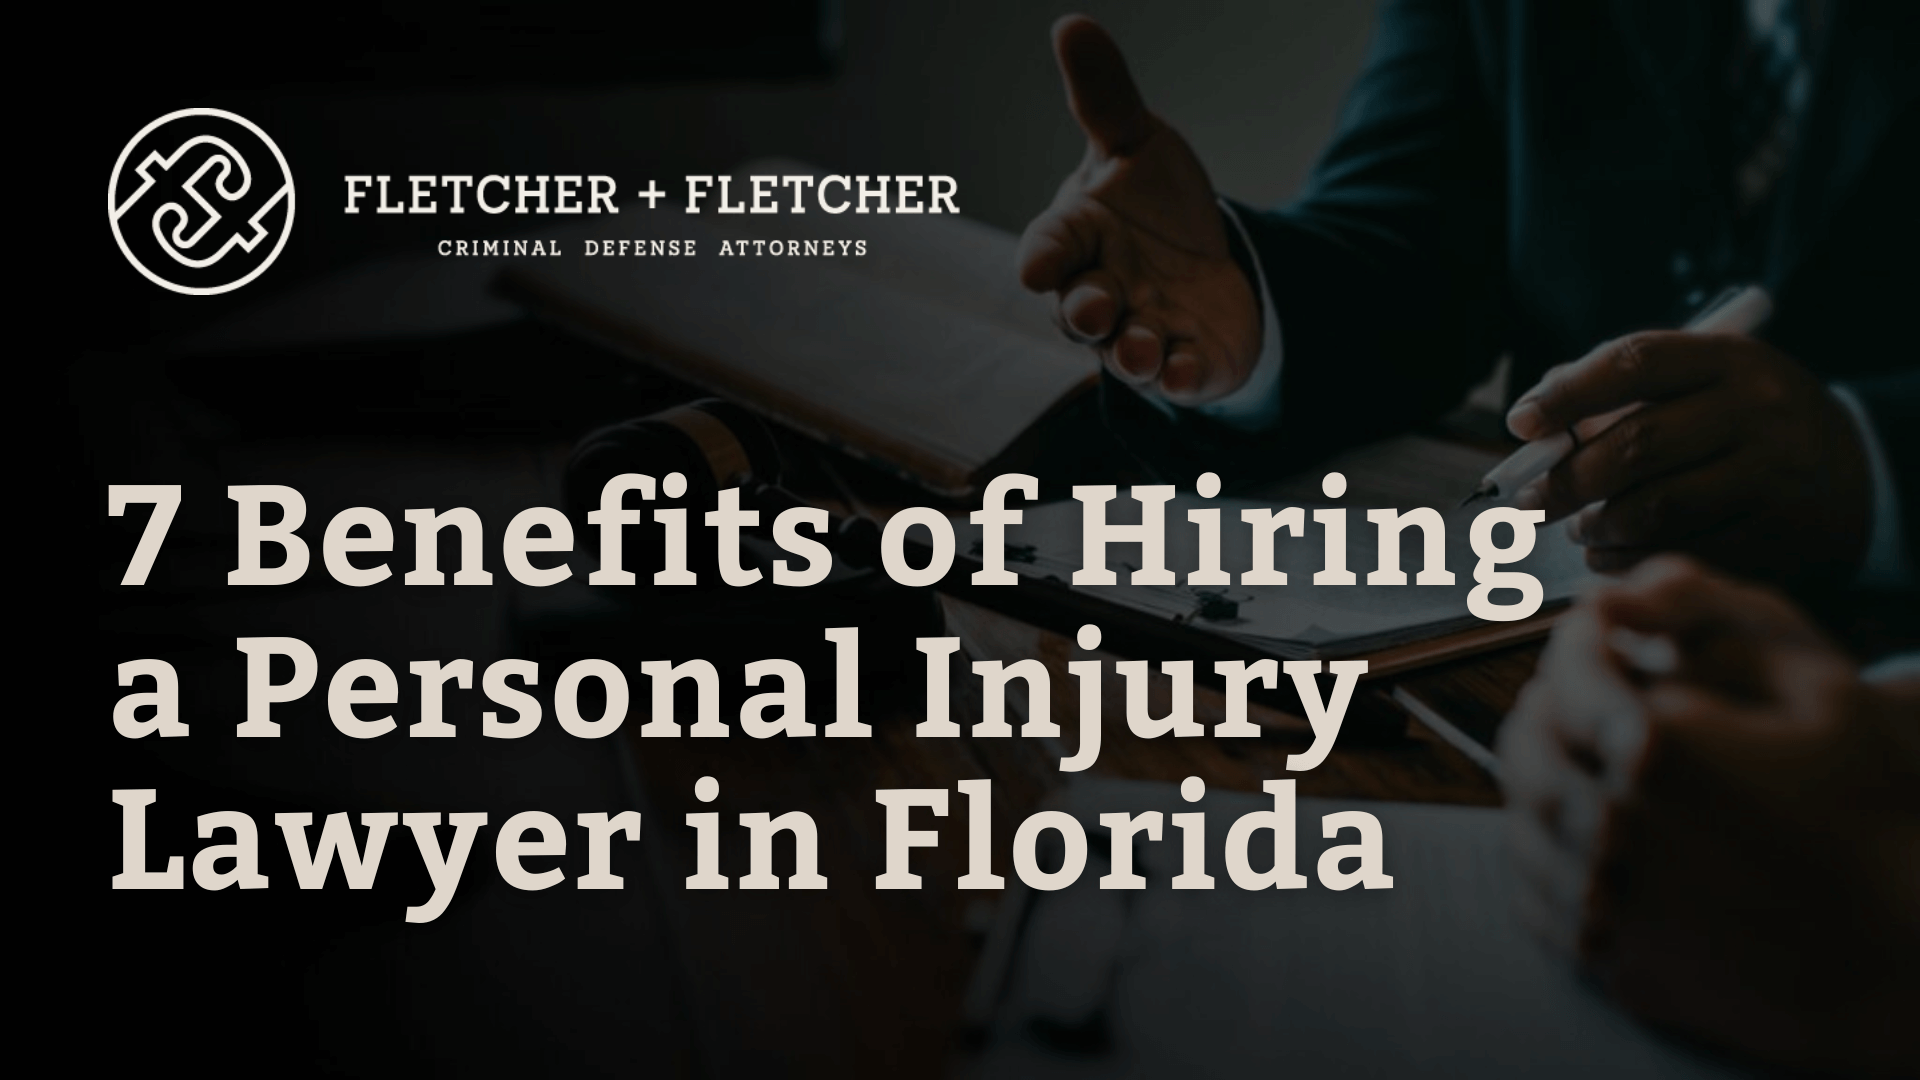 Benefits of Hiring a Personal Injury Lawyer in Florida - Fletcher Fletcher Florida criminal defense lawyers